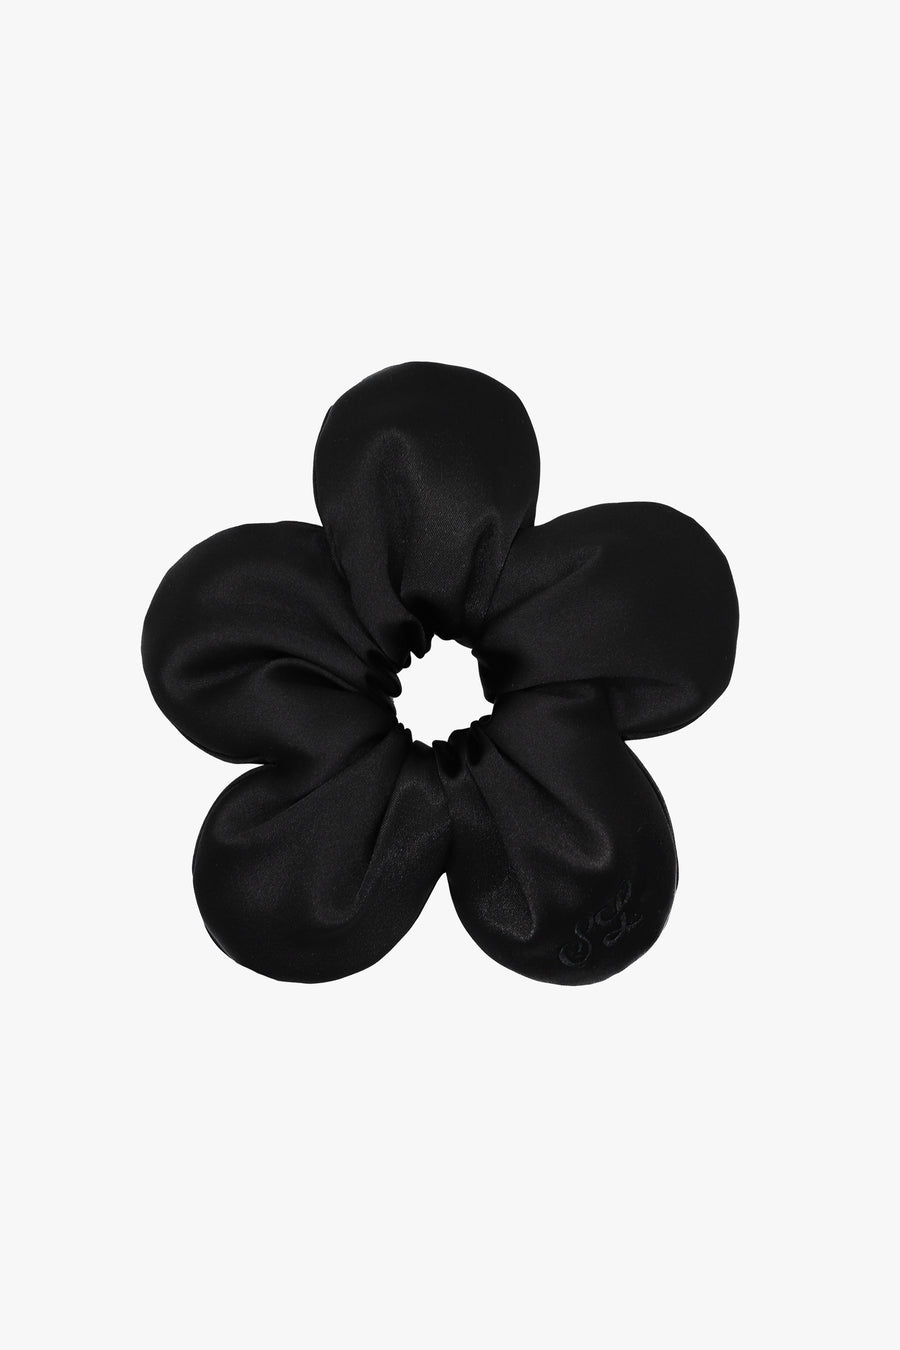 Flower Power 2.0 in Black